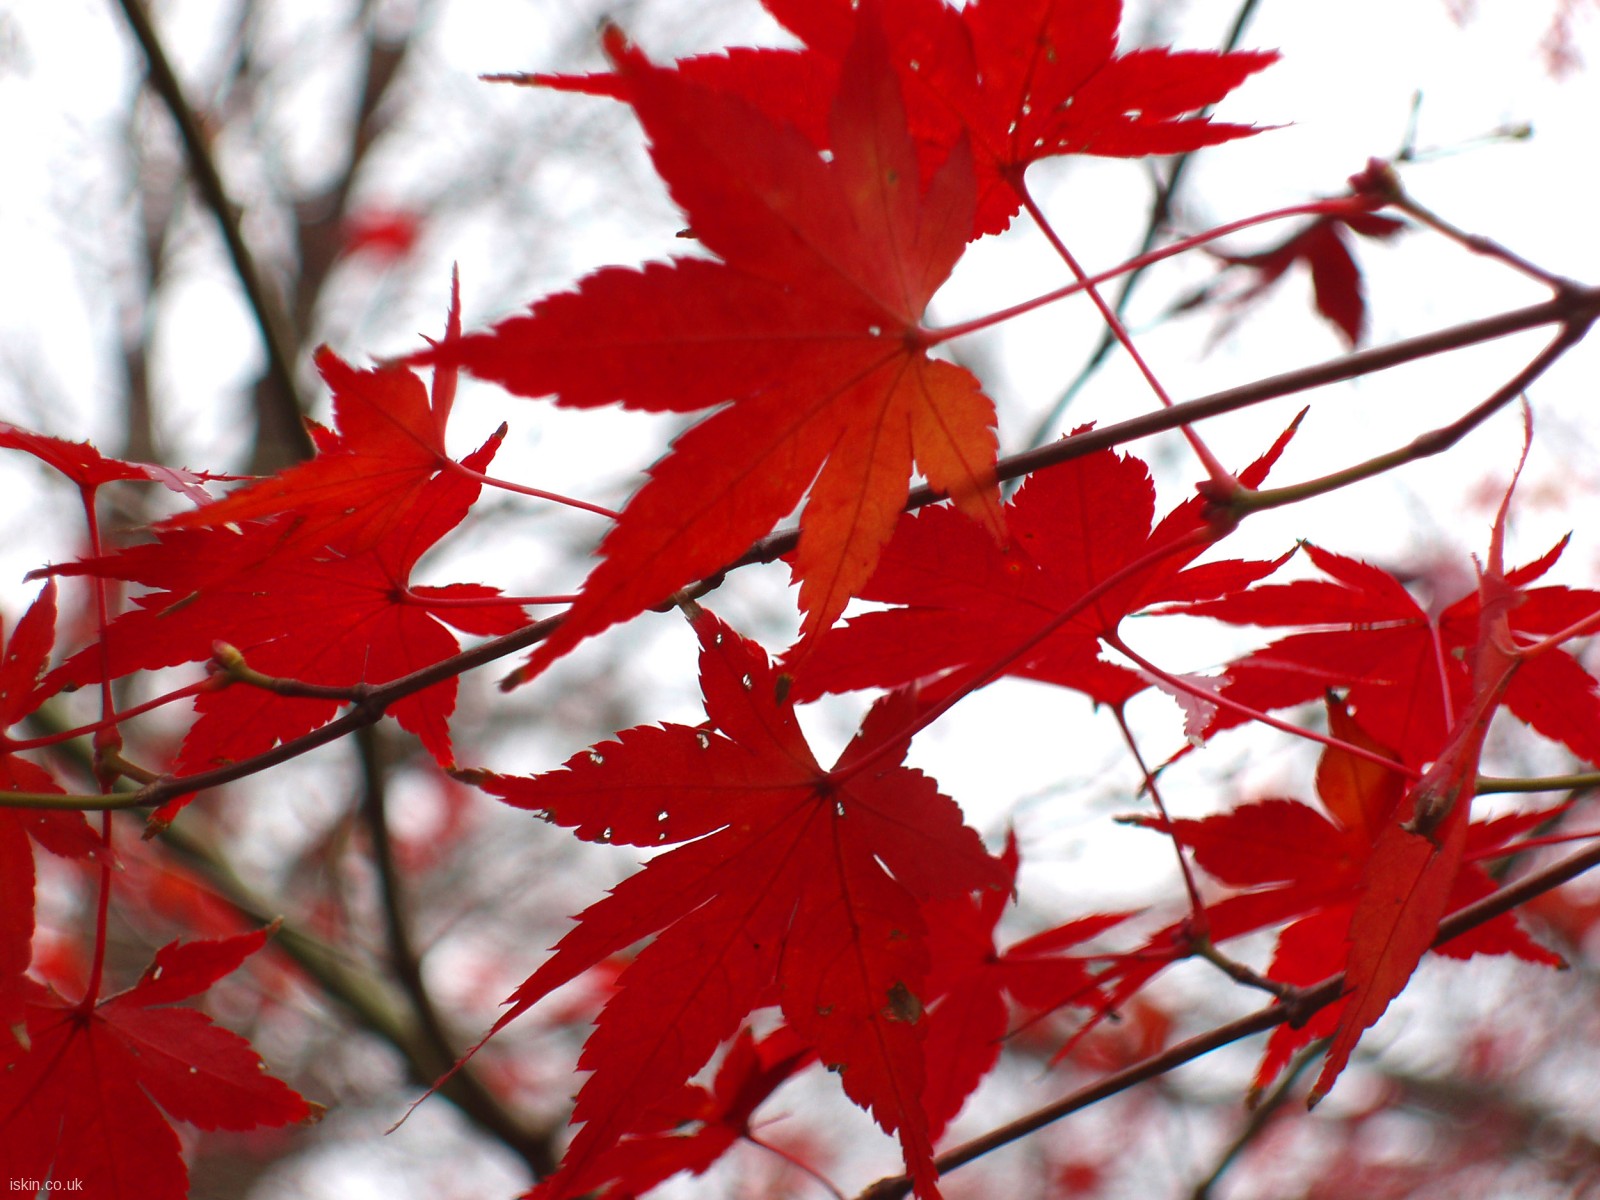 Autumn Blaze Red Maple Leaf Autumn Blaze Red Maple Leaf pics